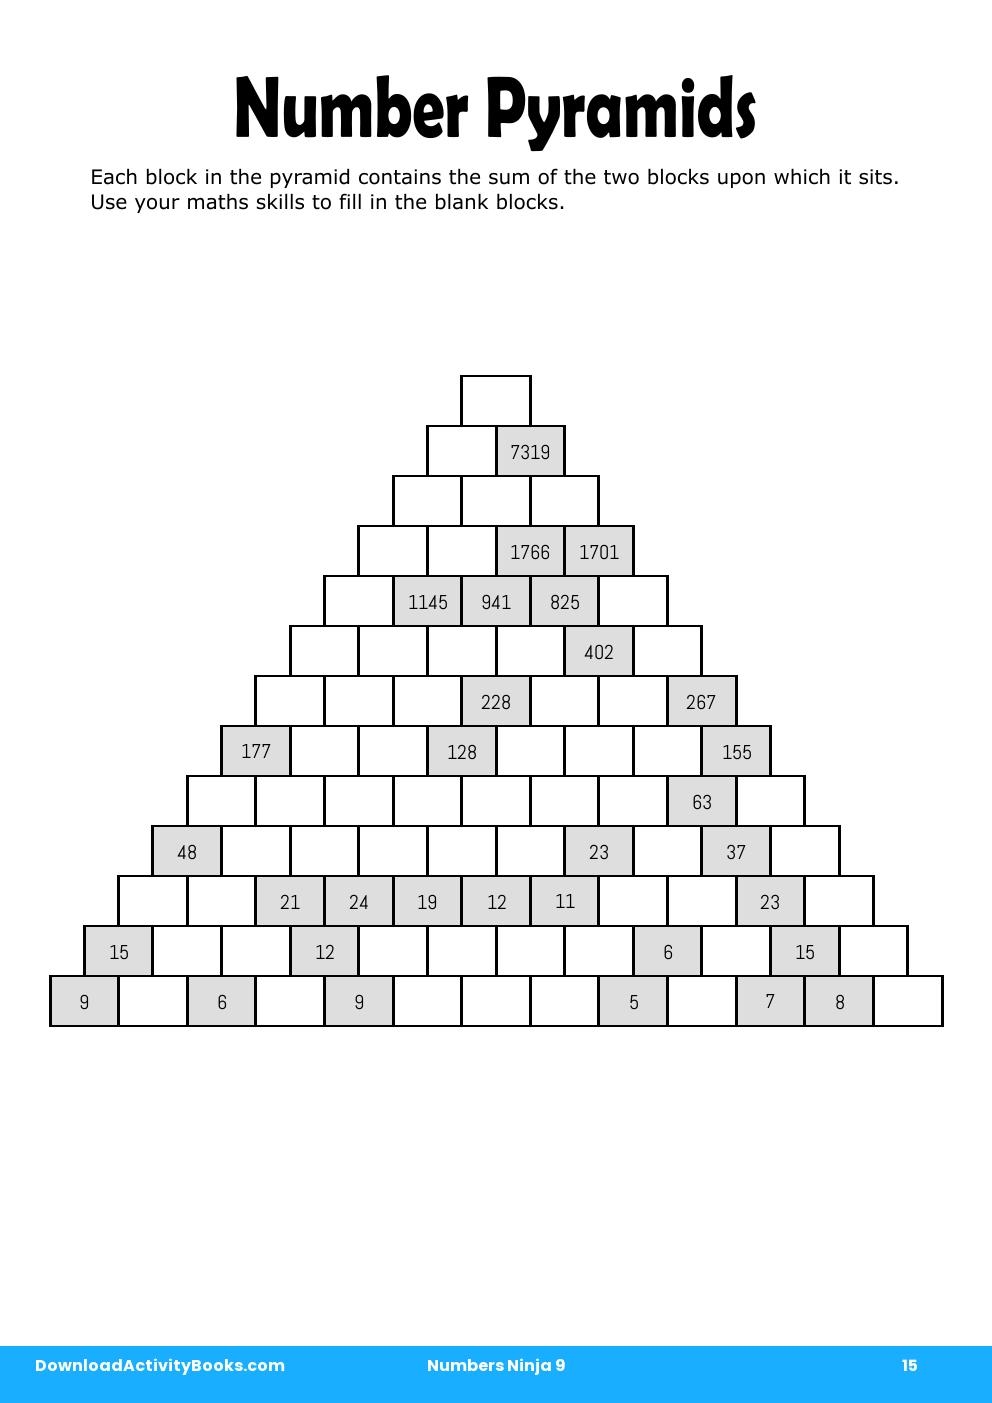 Number Pyramids in Numbers Ninja 9